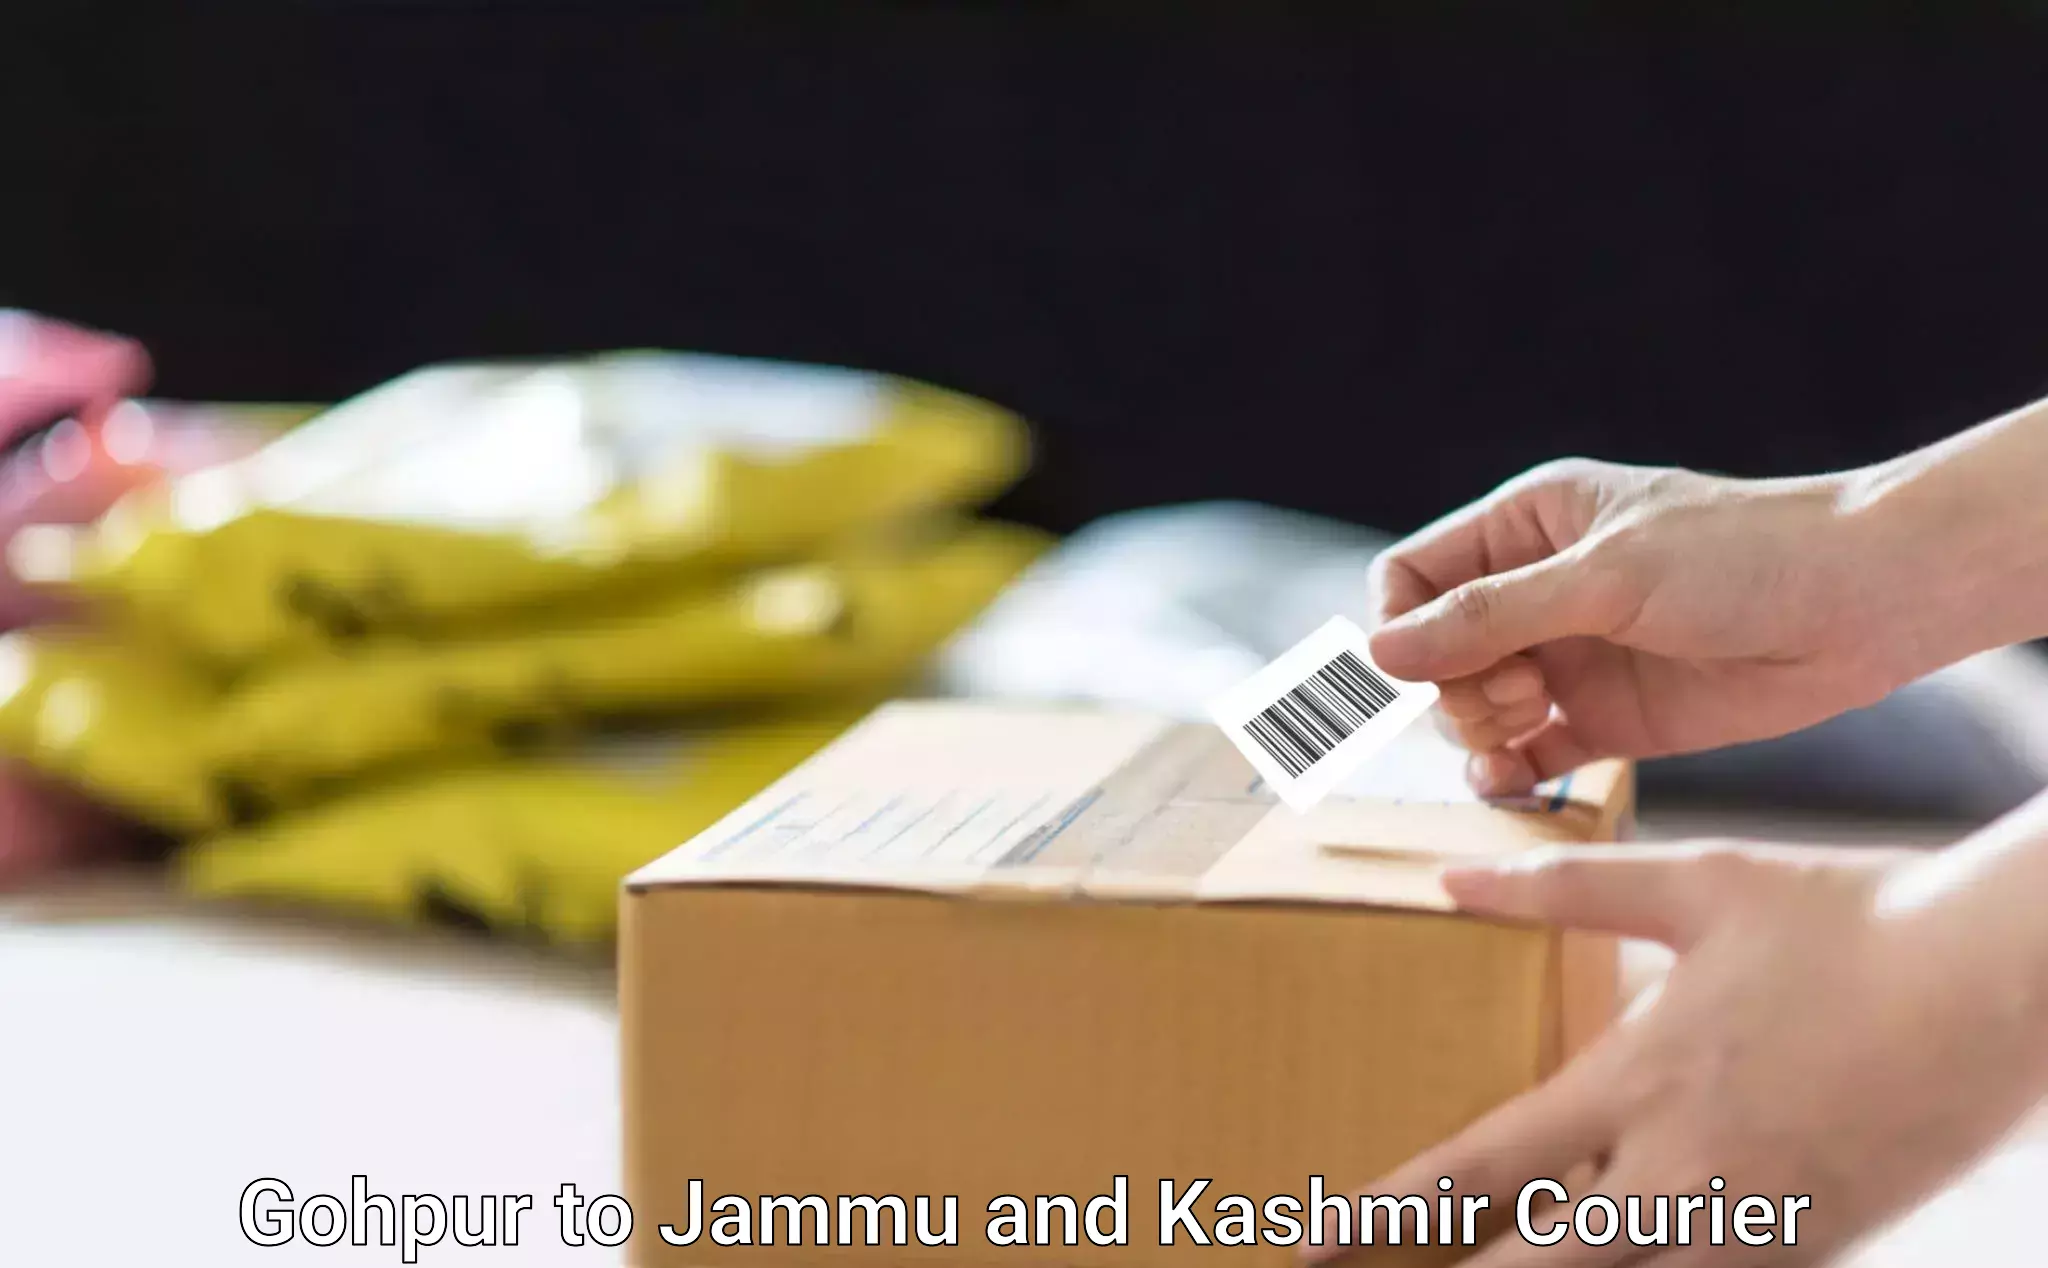 Logistics service provider Gohpur to Jammu and Kashmir